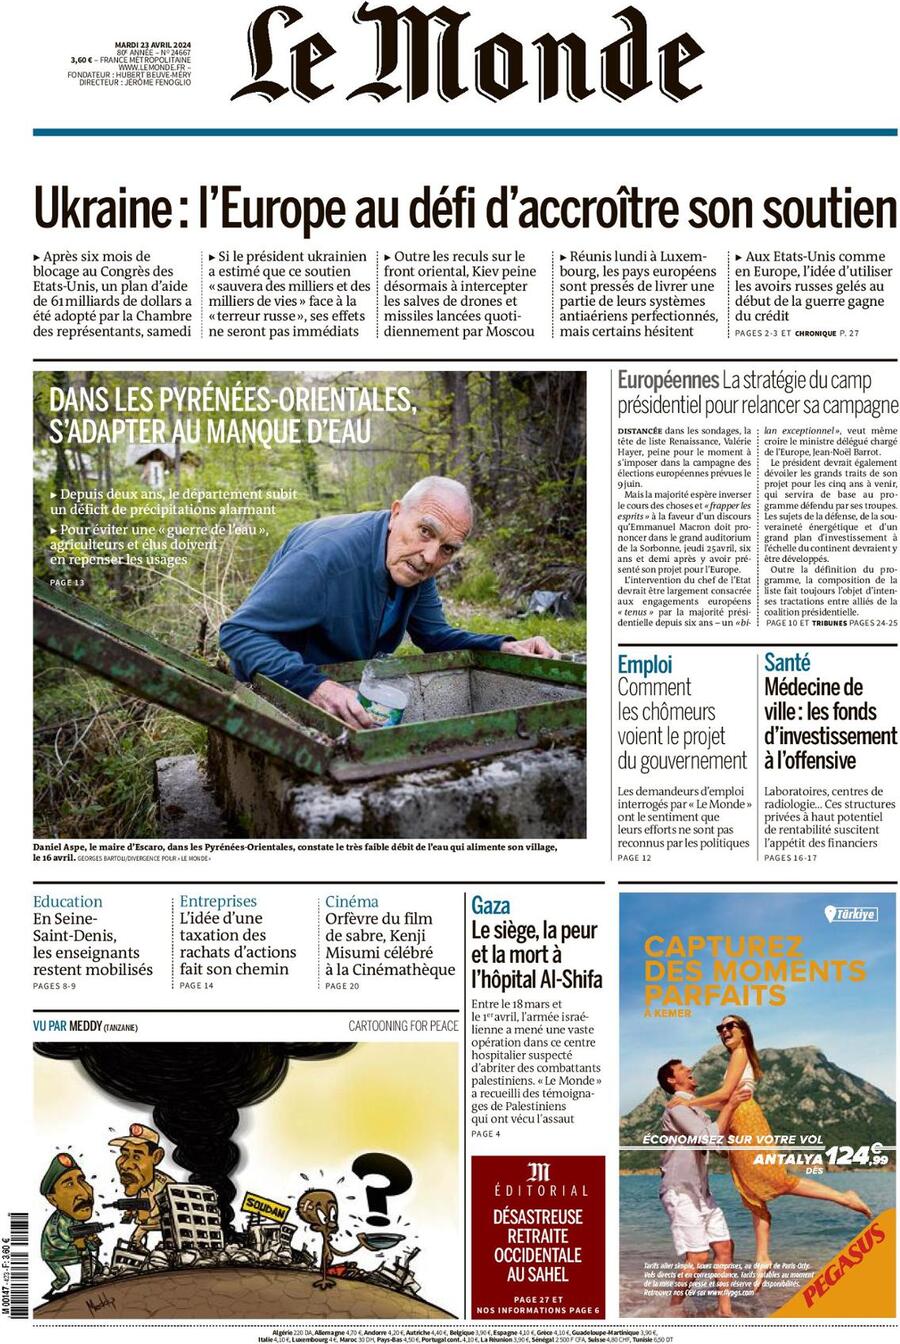 Le Monde (Francia), prima pagina